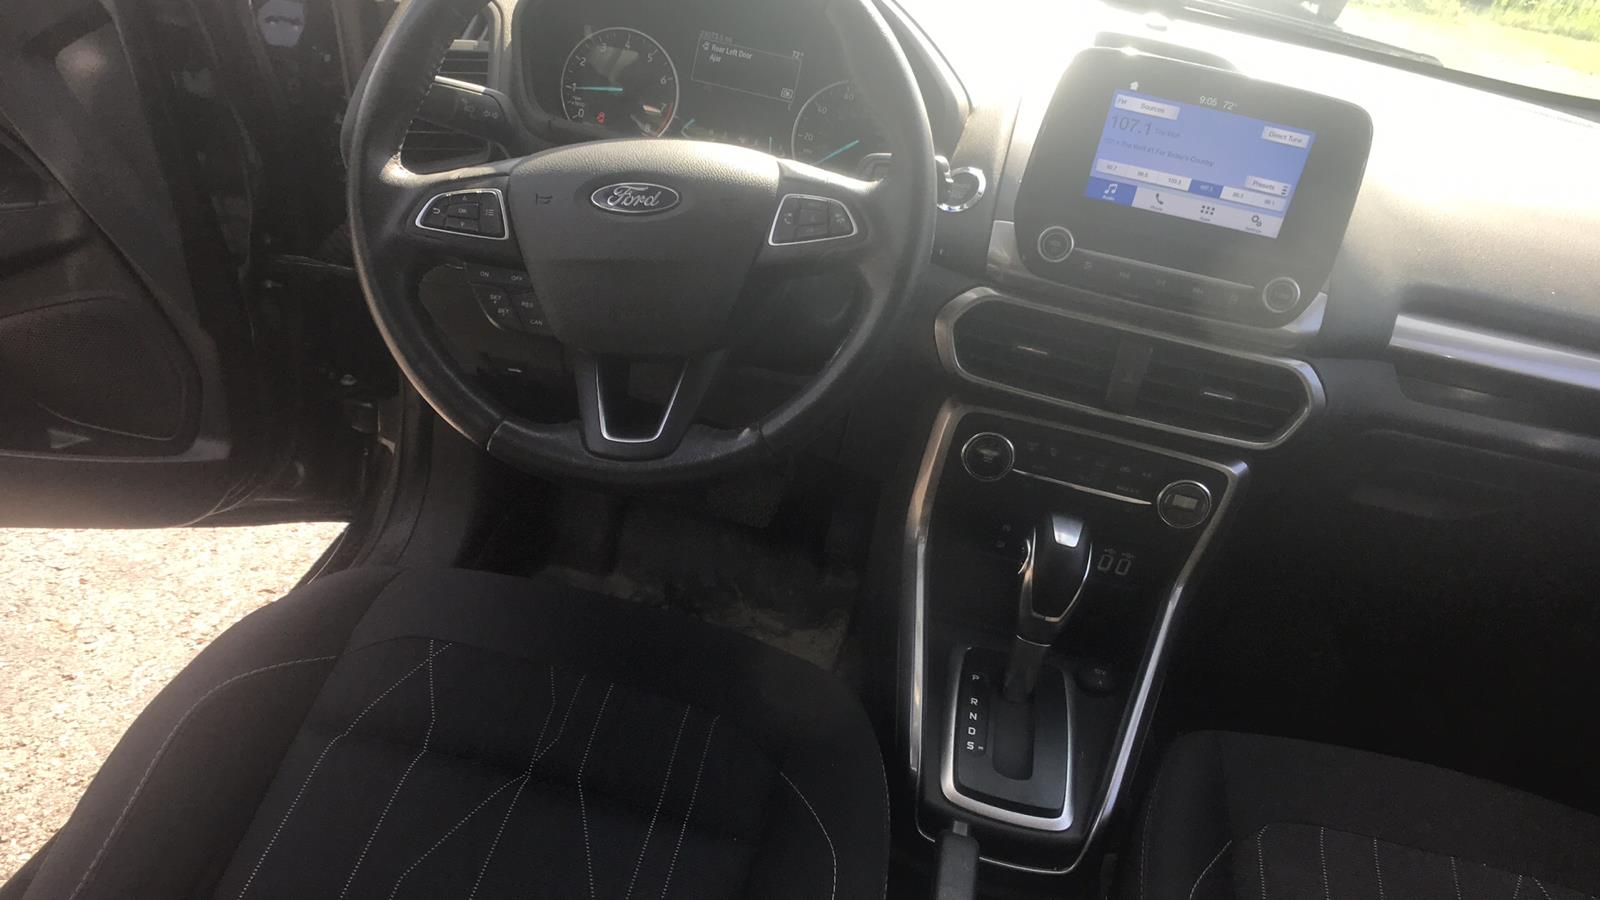 2019 Ford EcoSport Sport Utility